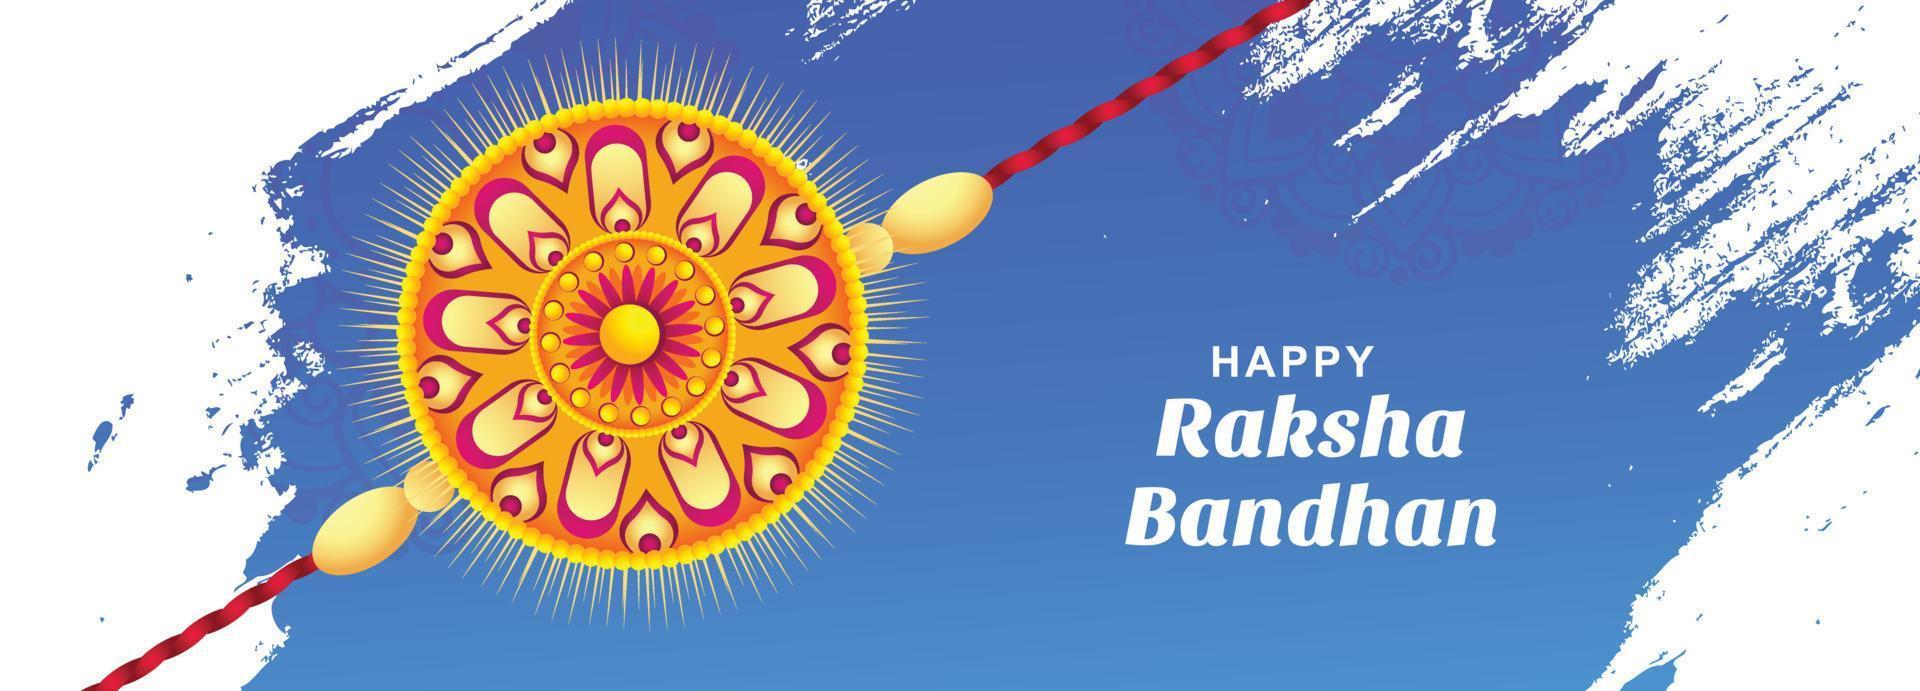 gelukkig raksha bandhan festivalkaart bannerontwerp vector